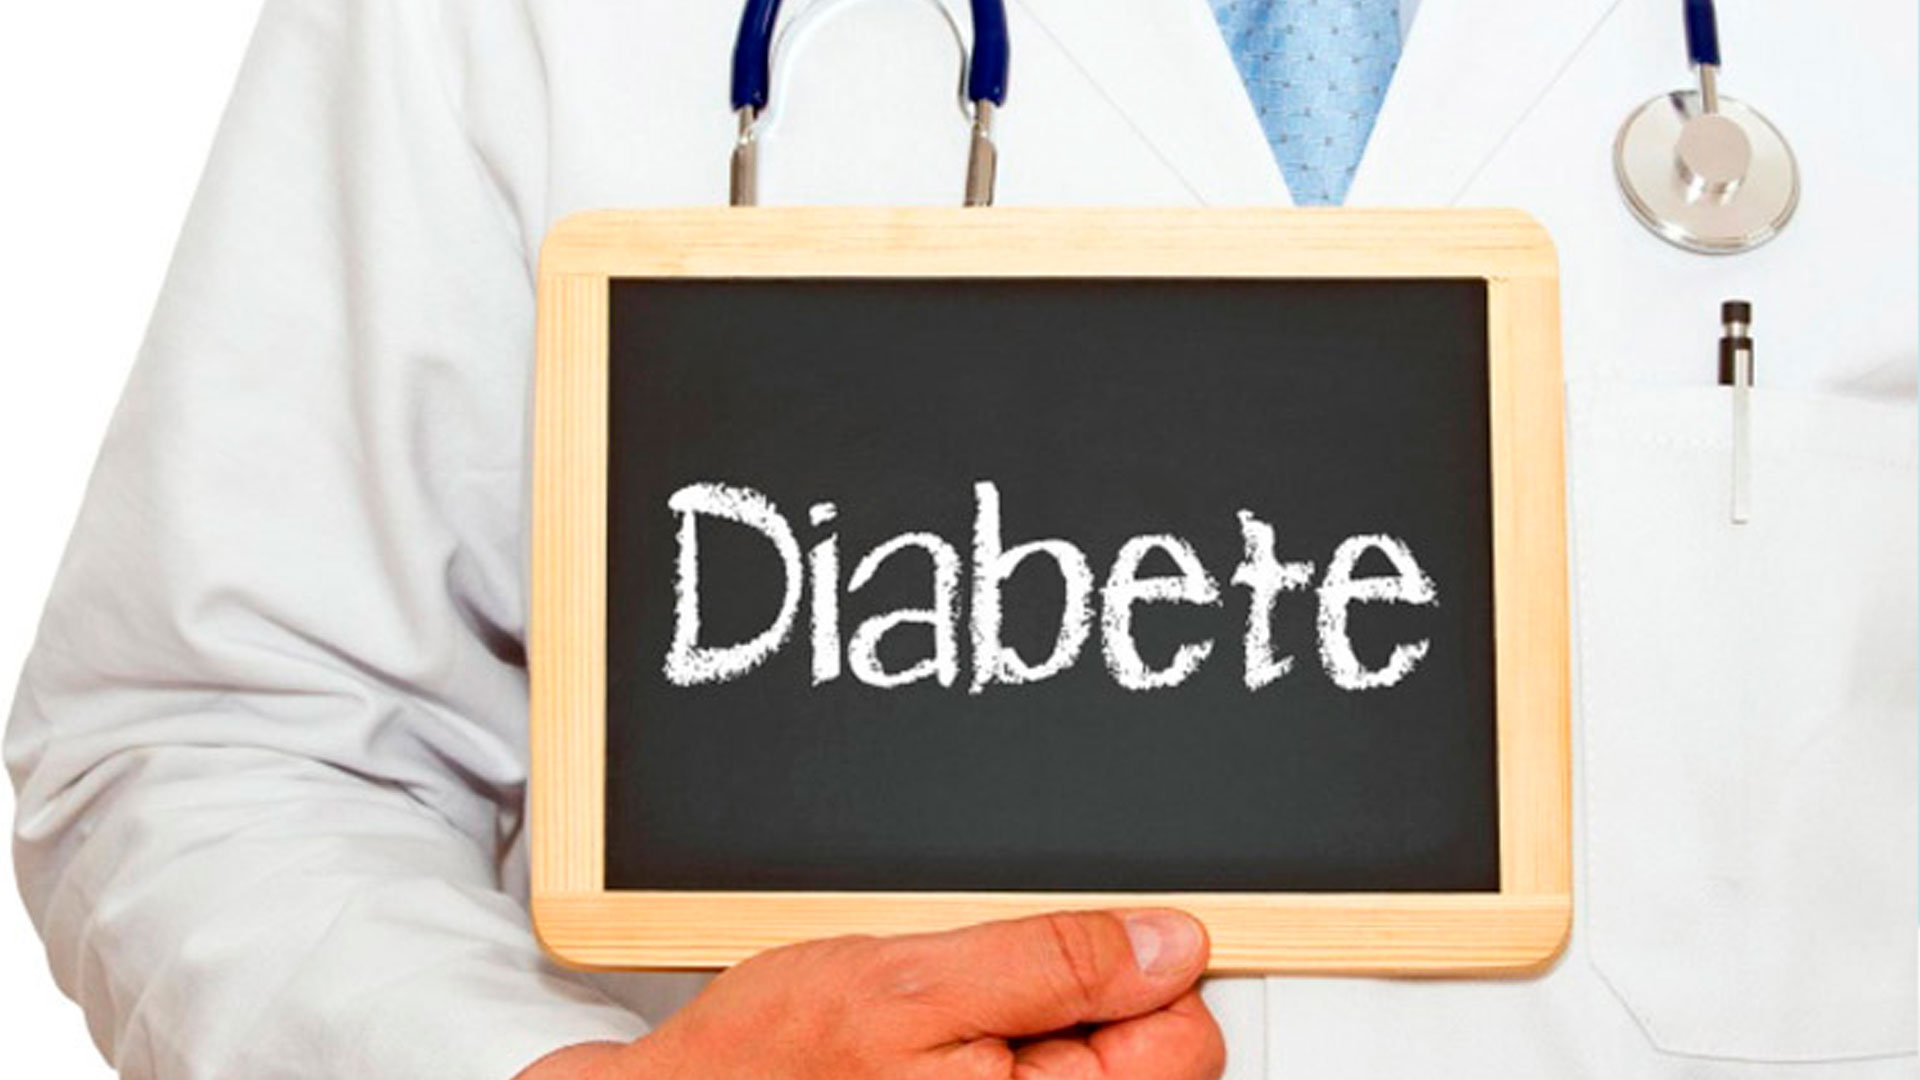 Diabete di tipo 1, trapianti di cellule insulari funzionali e sicuri fino a 8 anni